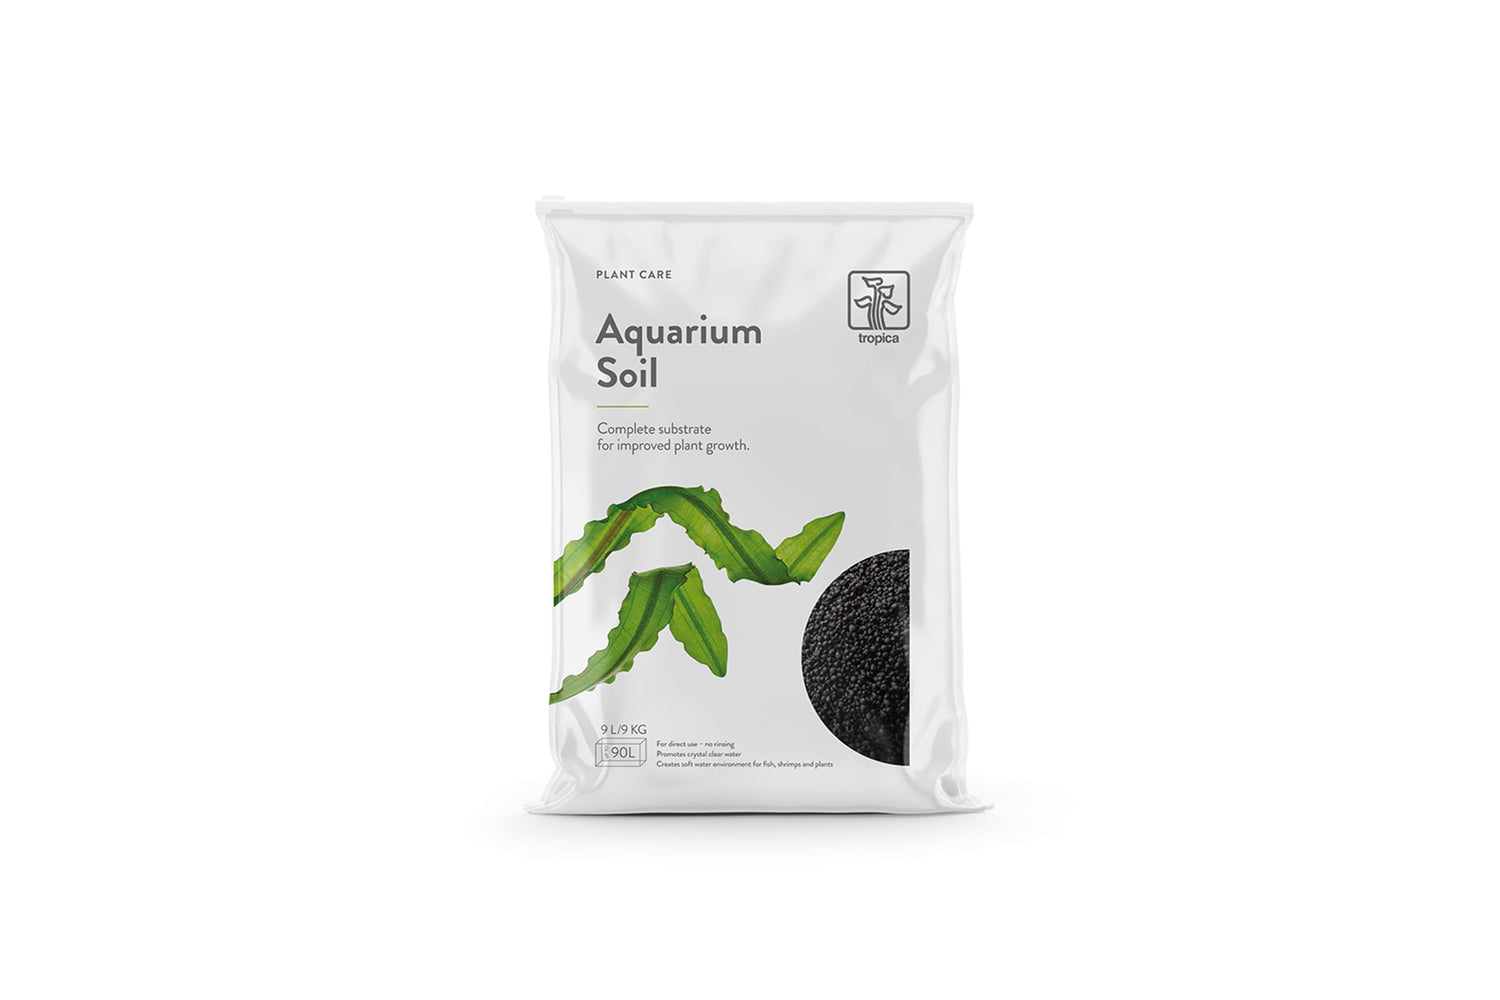 Do aquarium plants need soil?